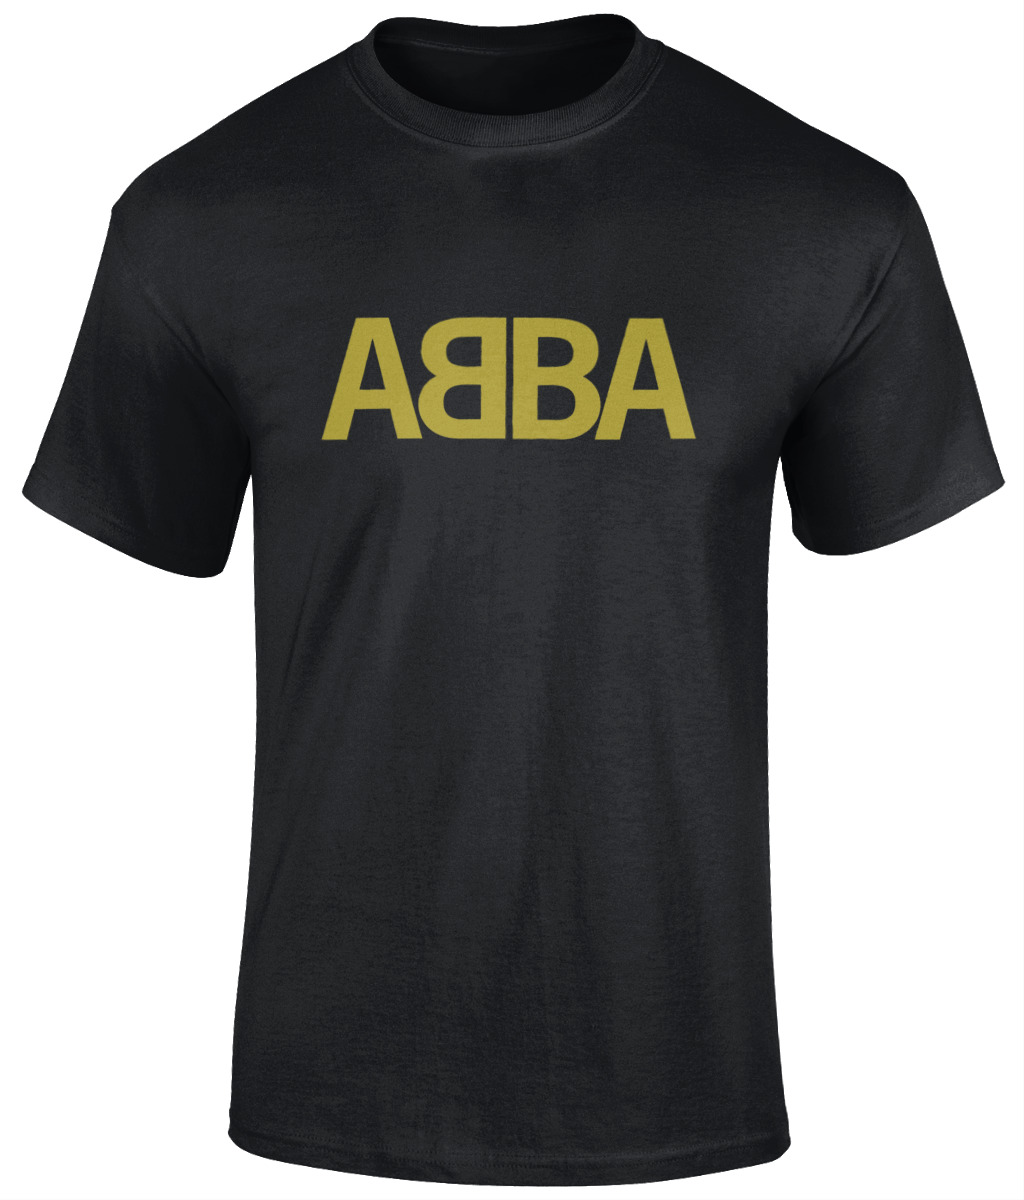 Abba Logo Black T Shirt Eurovision Waterloo Voyage S-4XL Voyage Pop Music London